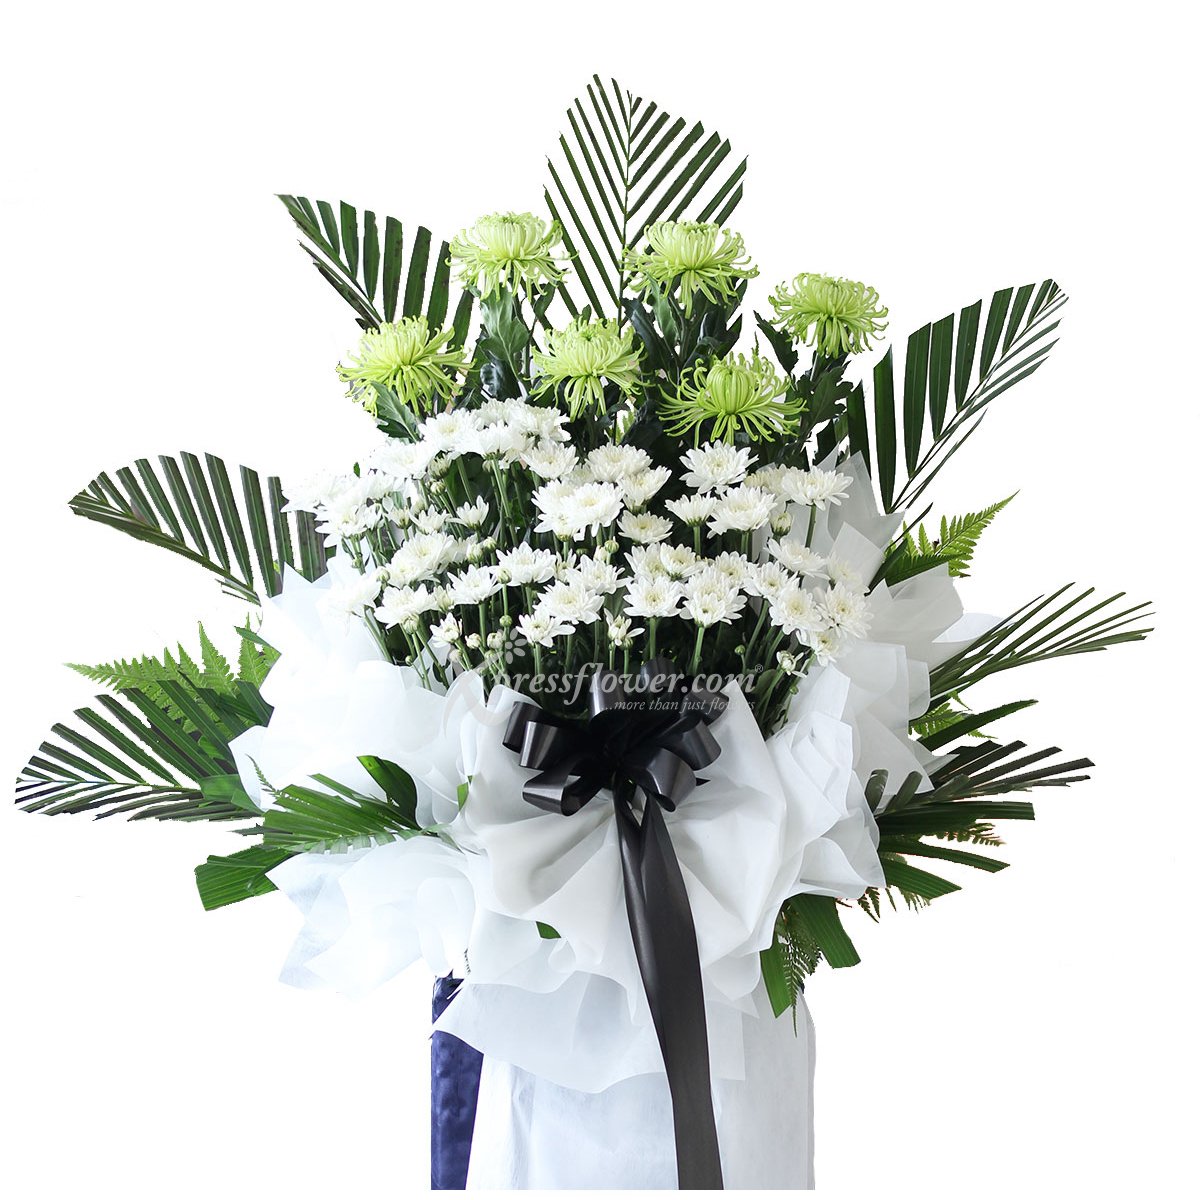 Evergreen Love (Funeral Condolence Flower Wreath)